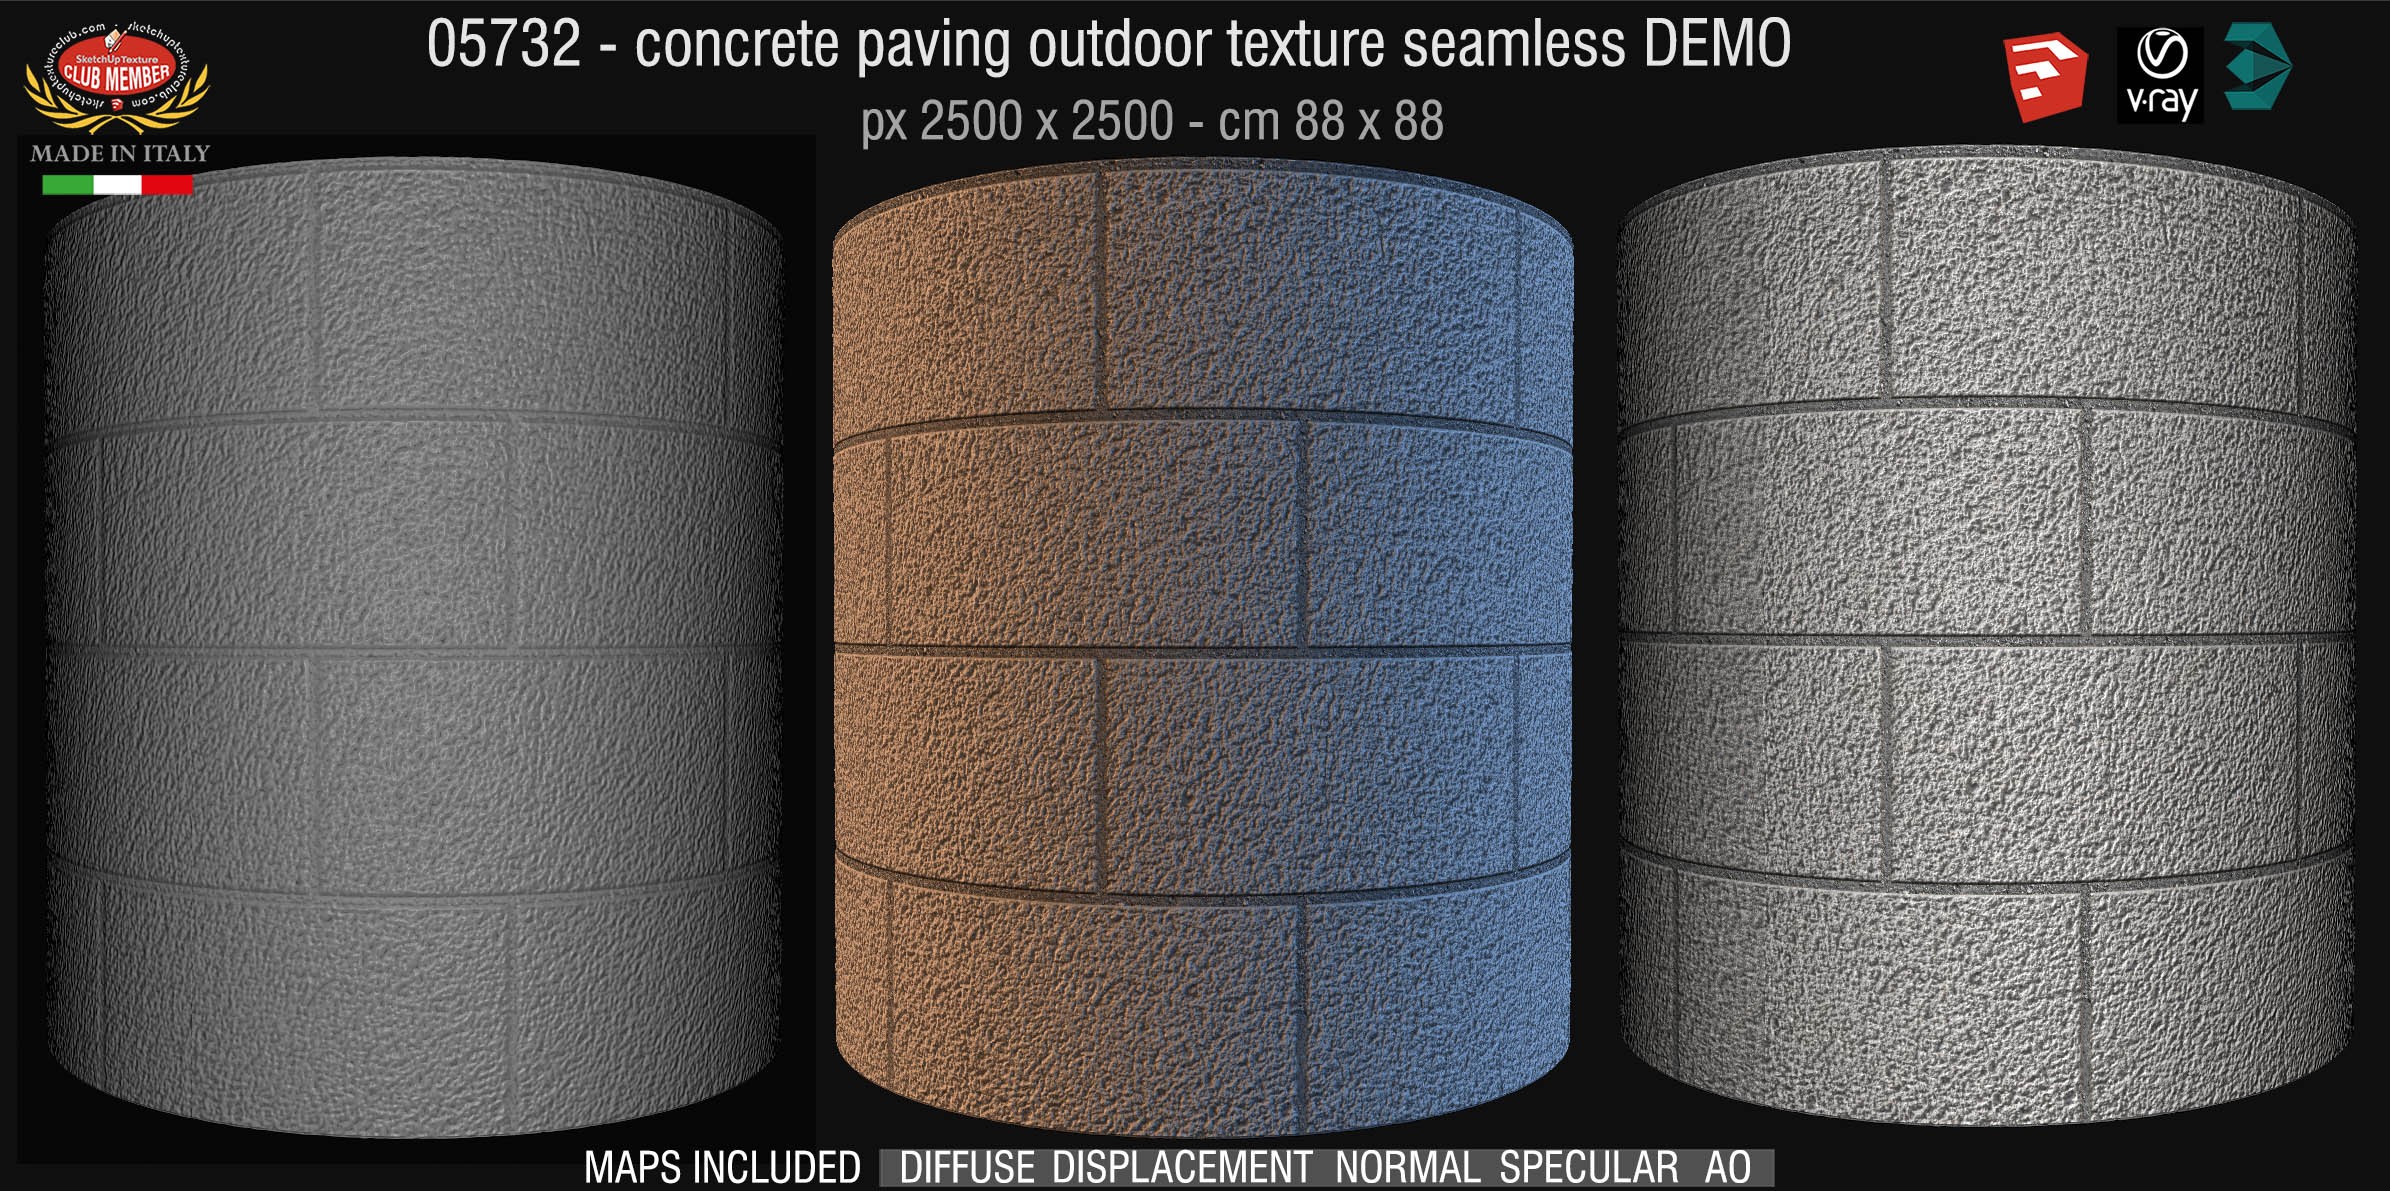 05732 HR Paving outdoor concrete regular block texture + maps DEMO